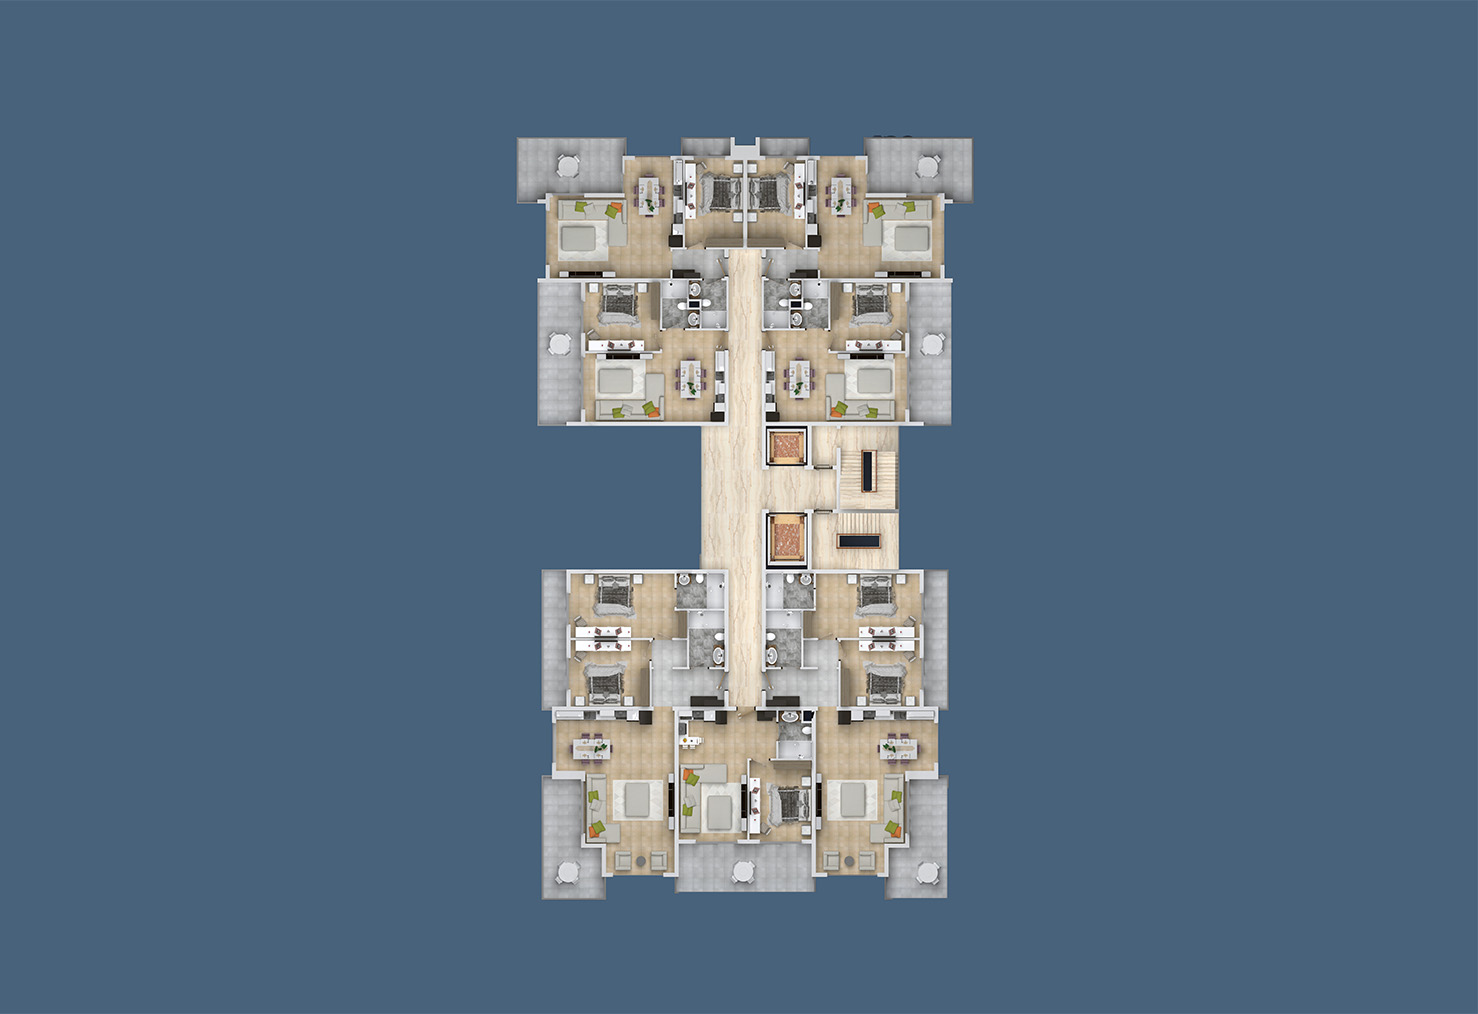 Floor plans of apartments 3 floor «A» Yekta Kingdom Trade Center